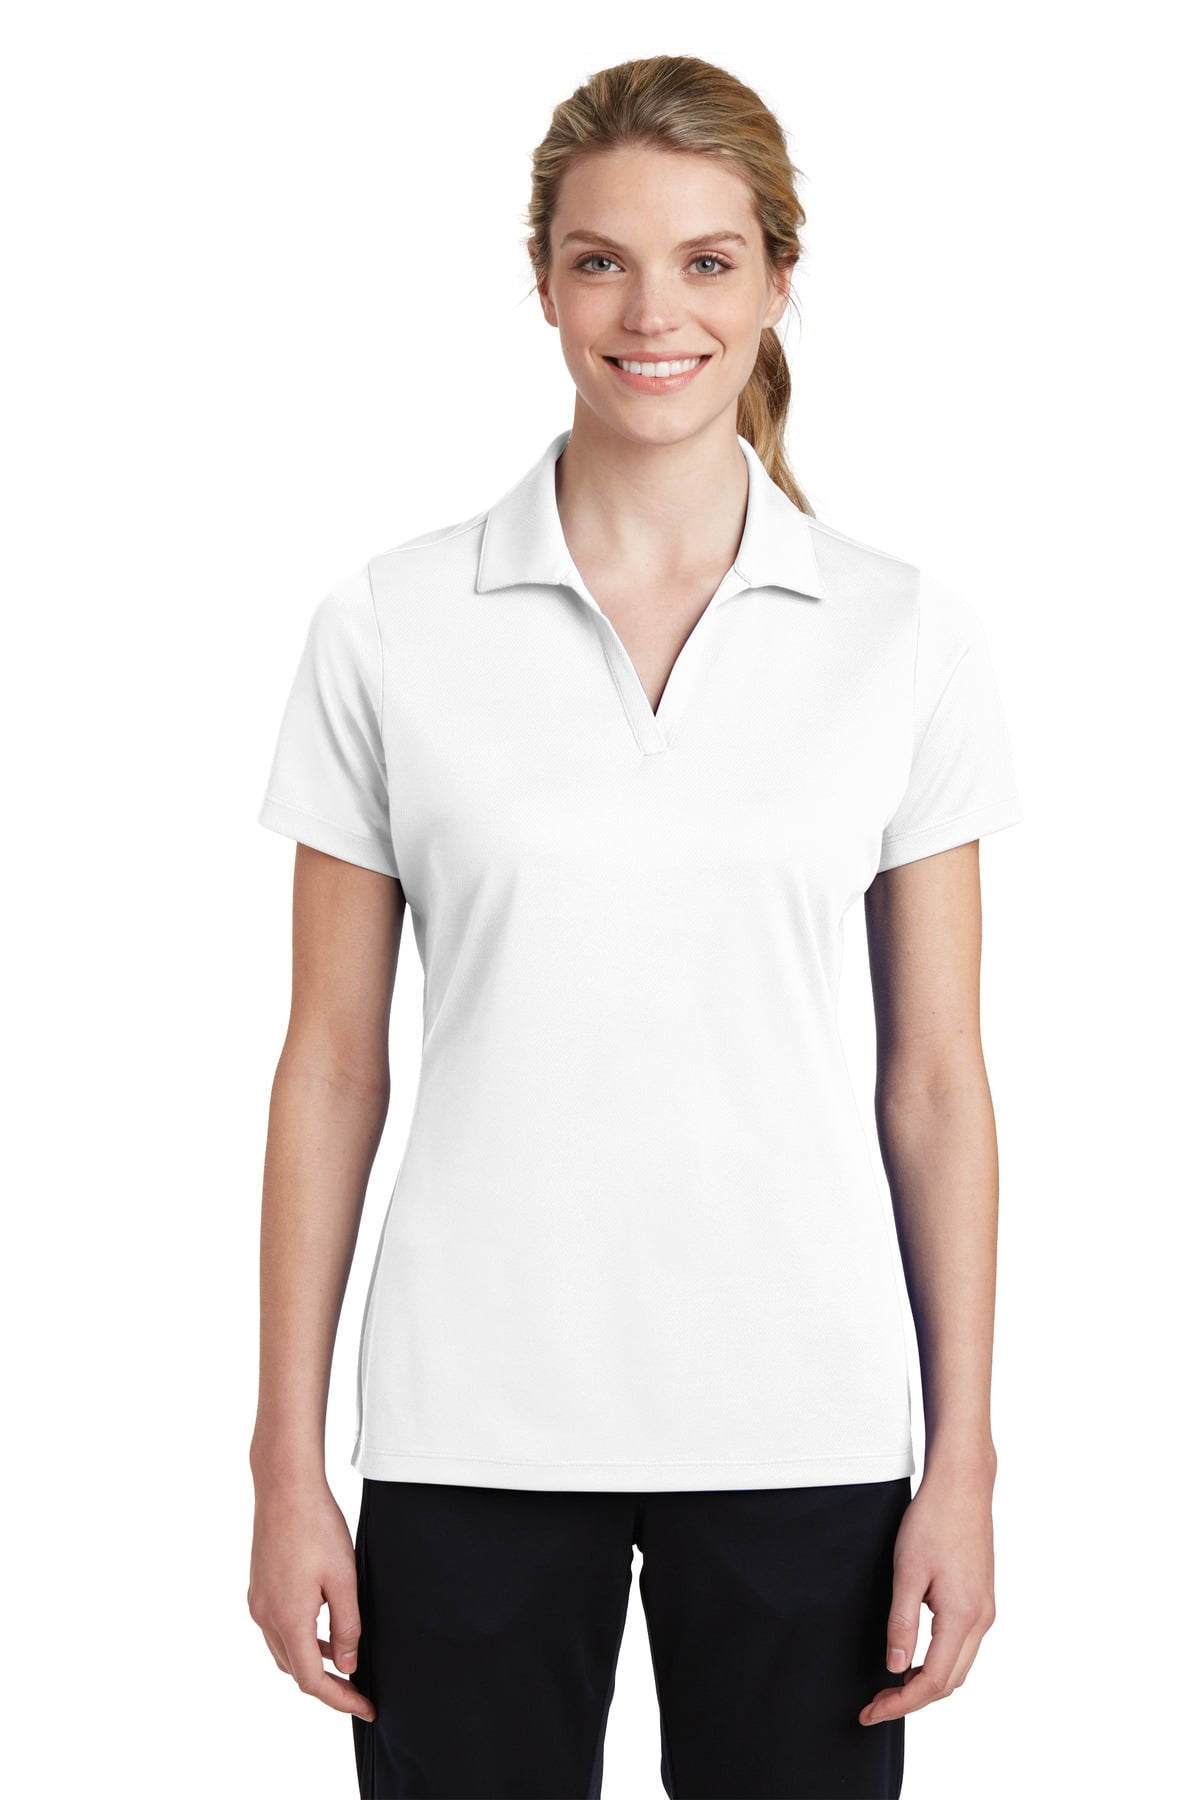 Womens Dri-Equip Short Sleeve Racer Mesh Polo Shirts in Size XS-4XL